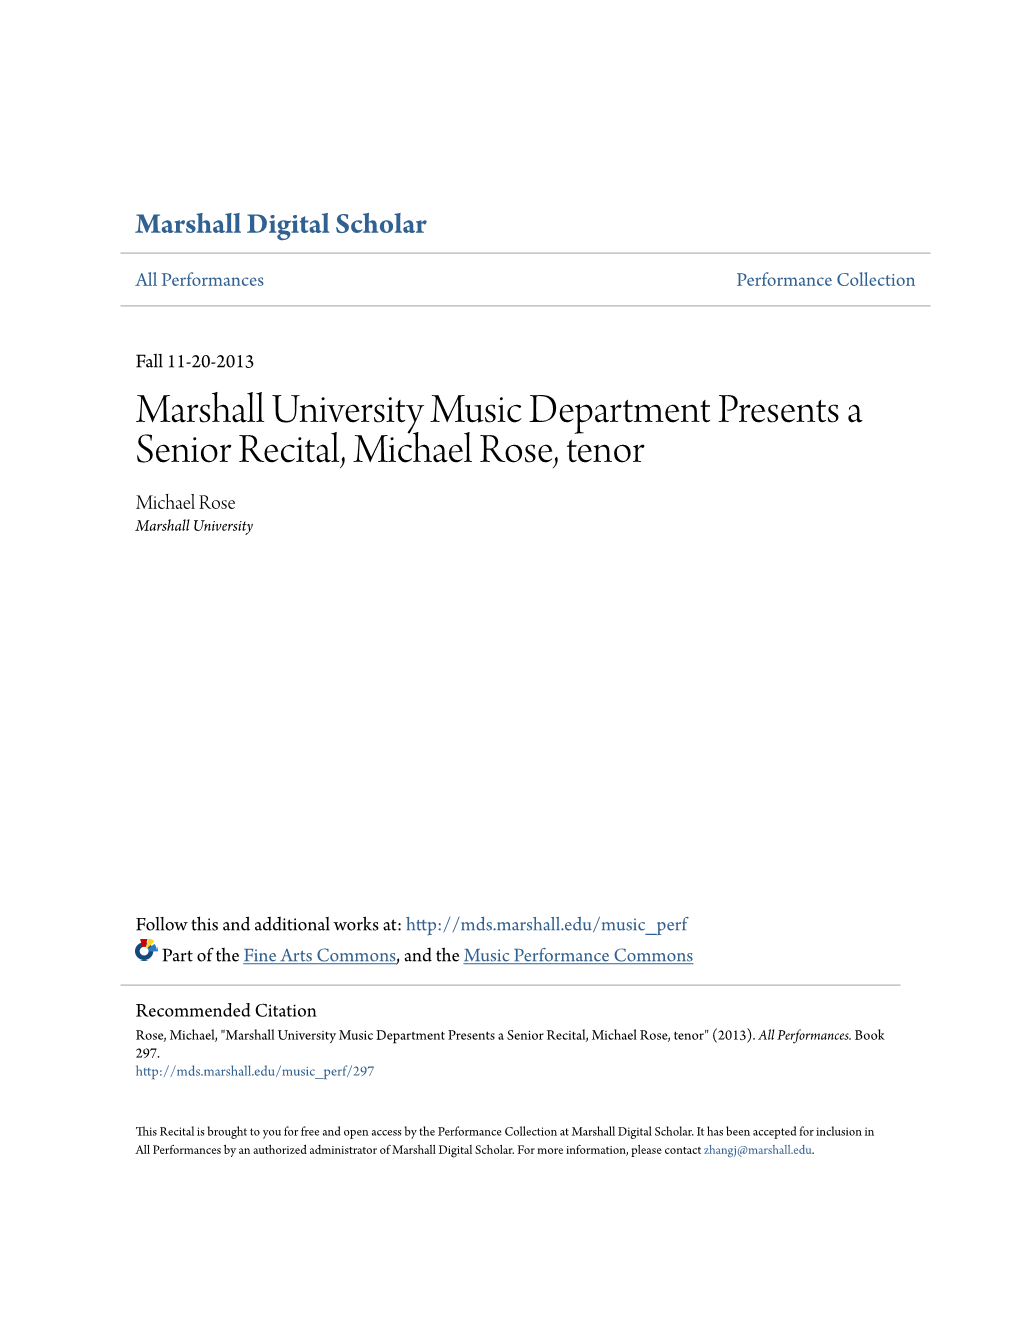 Marshall University Music Department Presents a Senior Recital, Michael Rose, Tenor Michael Rose Marshall University